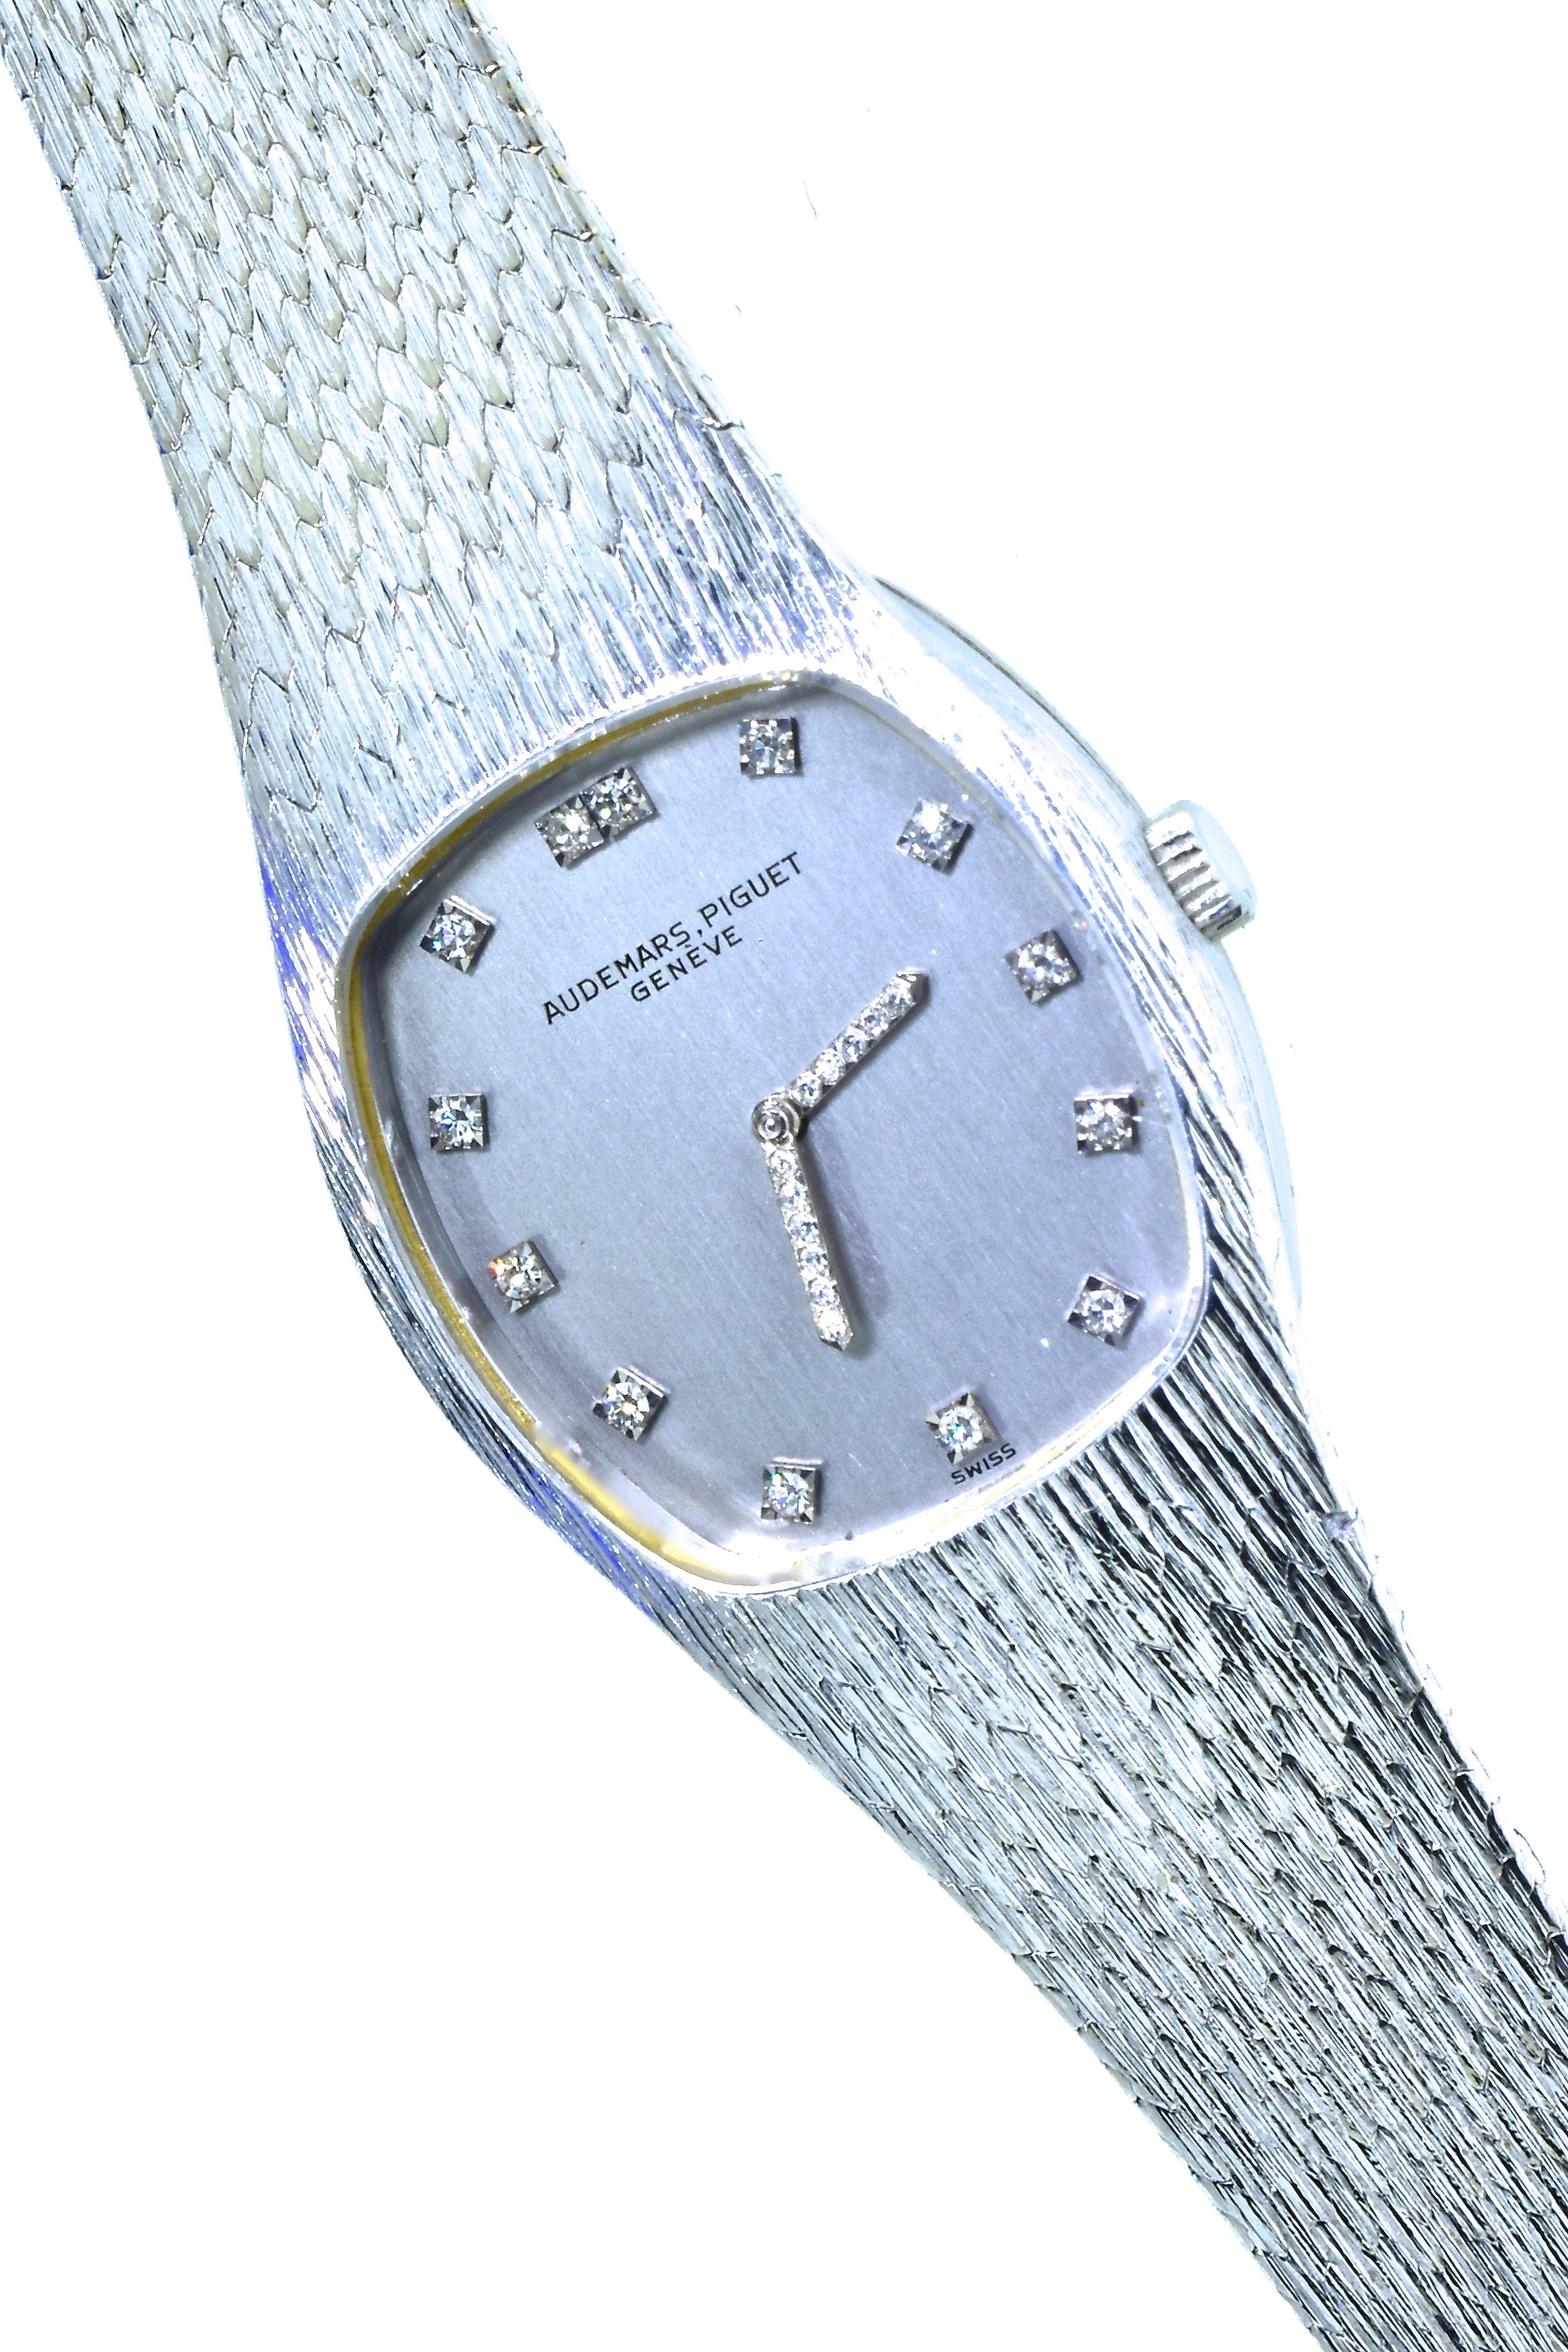 Brilliant Cut Audemars Piguet Geneva 18 Karat White Gold and Diamond Wristwatch, circa 1970